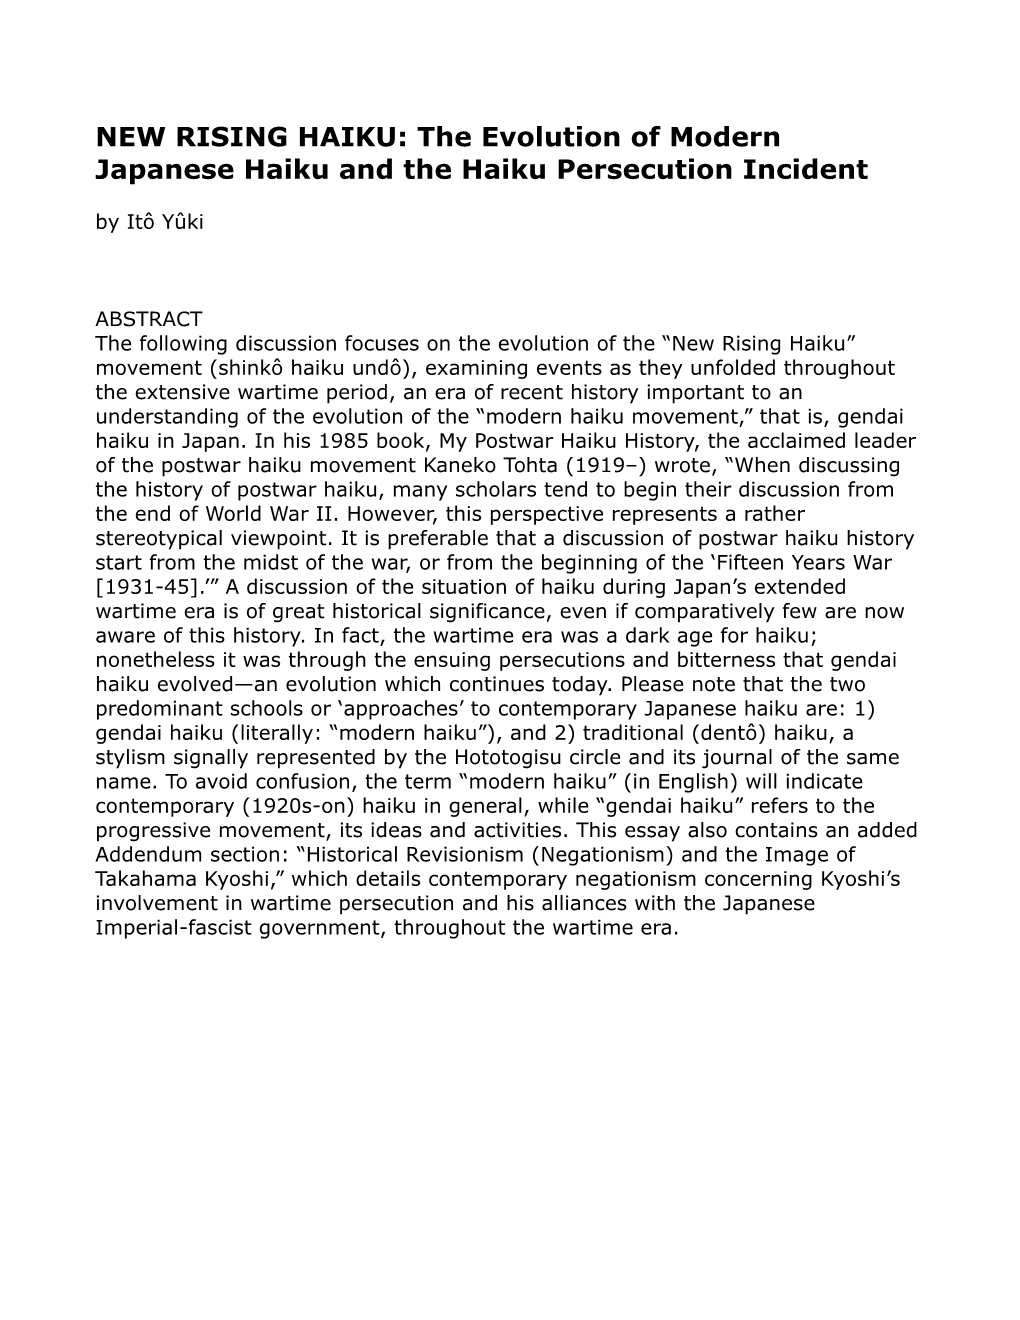 NEW RISING HAIKU: the Evolution of Modern Japanese Haiku and the Haiku Persecution Incident by Itô Yûki